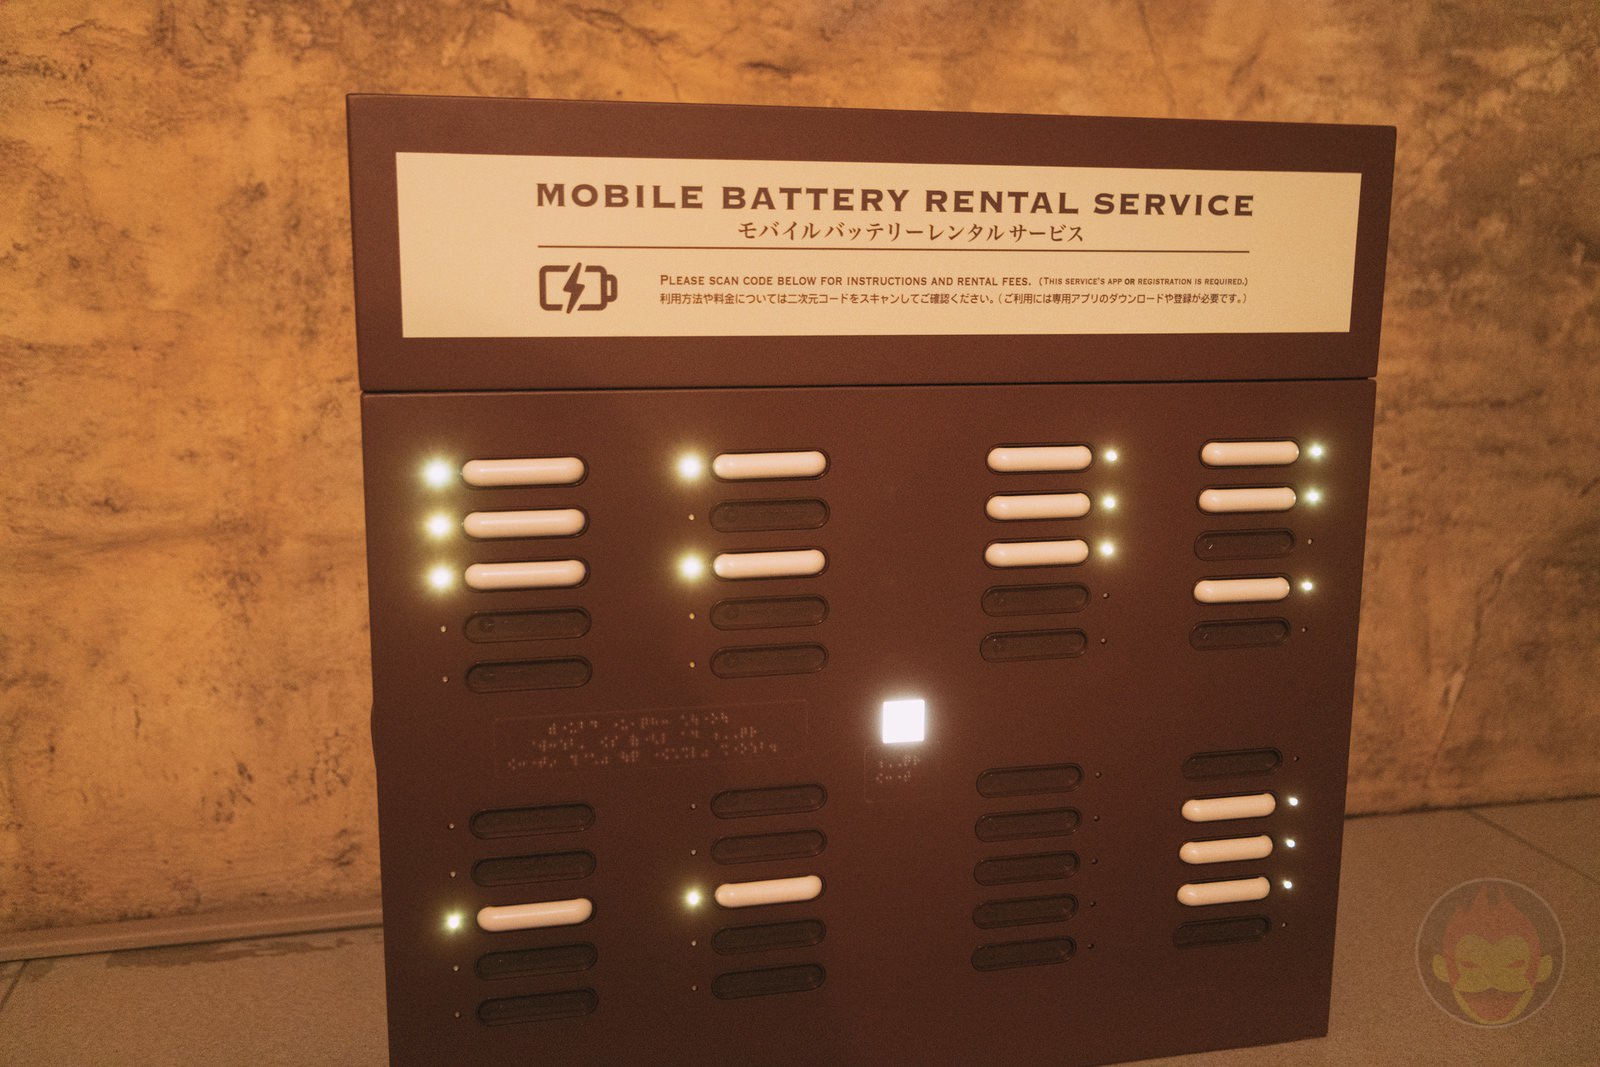 Disney-Mobile-Battery-Rental-Service-06.jpg